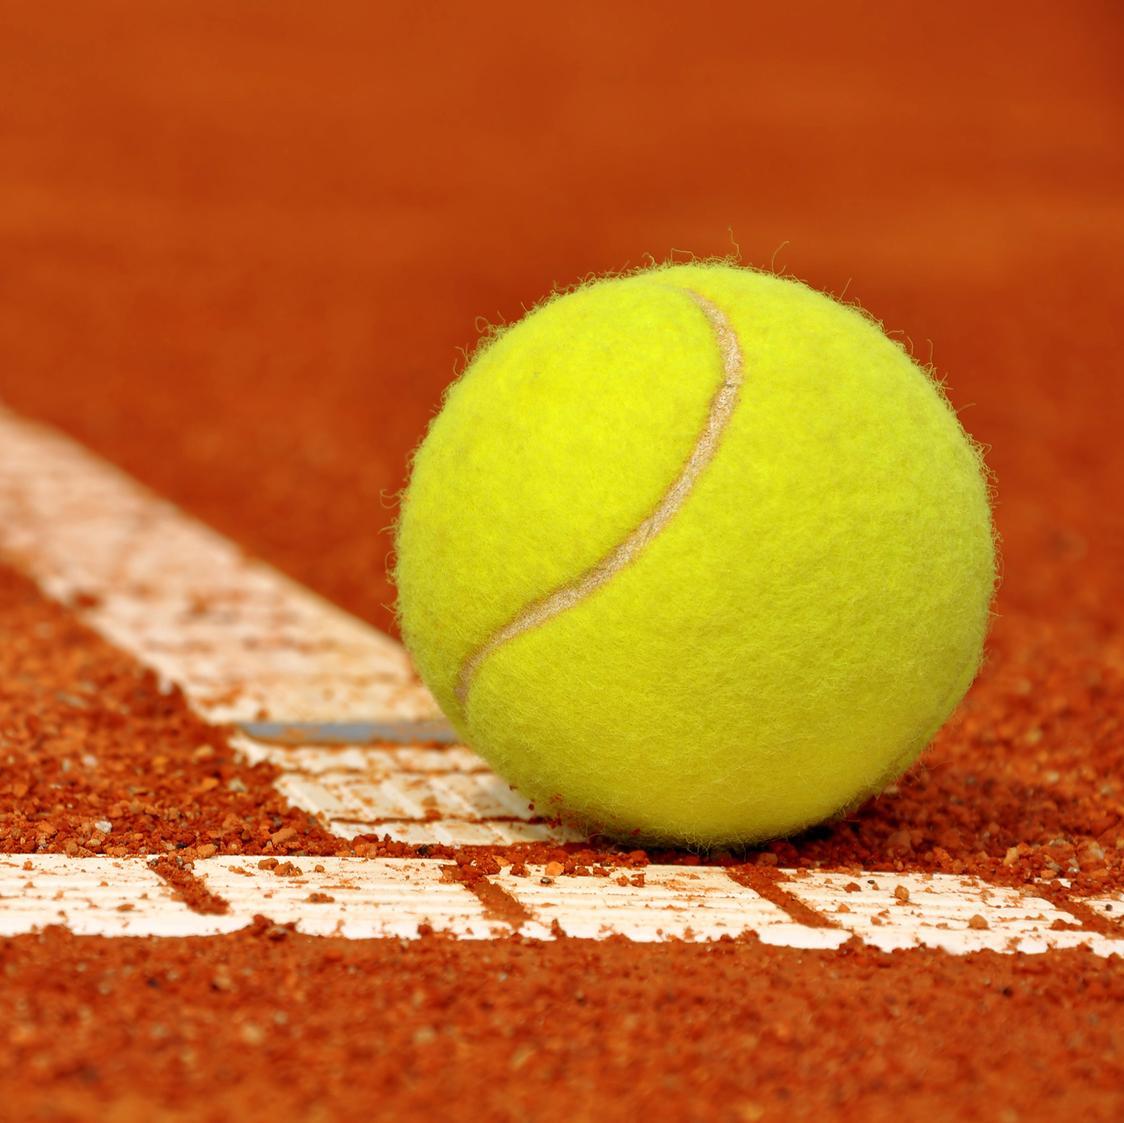 Australian Open • Roland Garros • Wimbledon • US Open